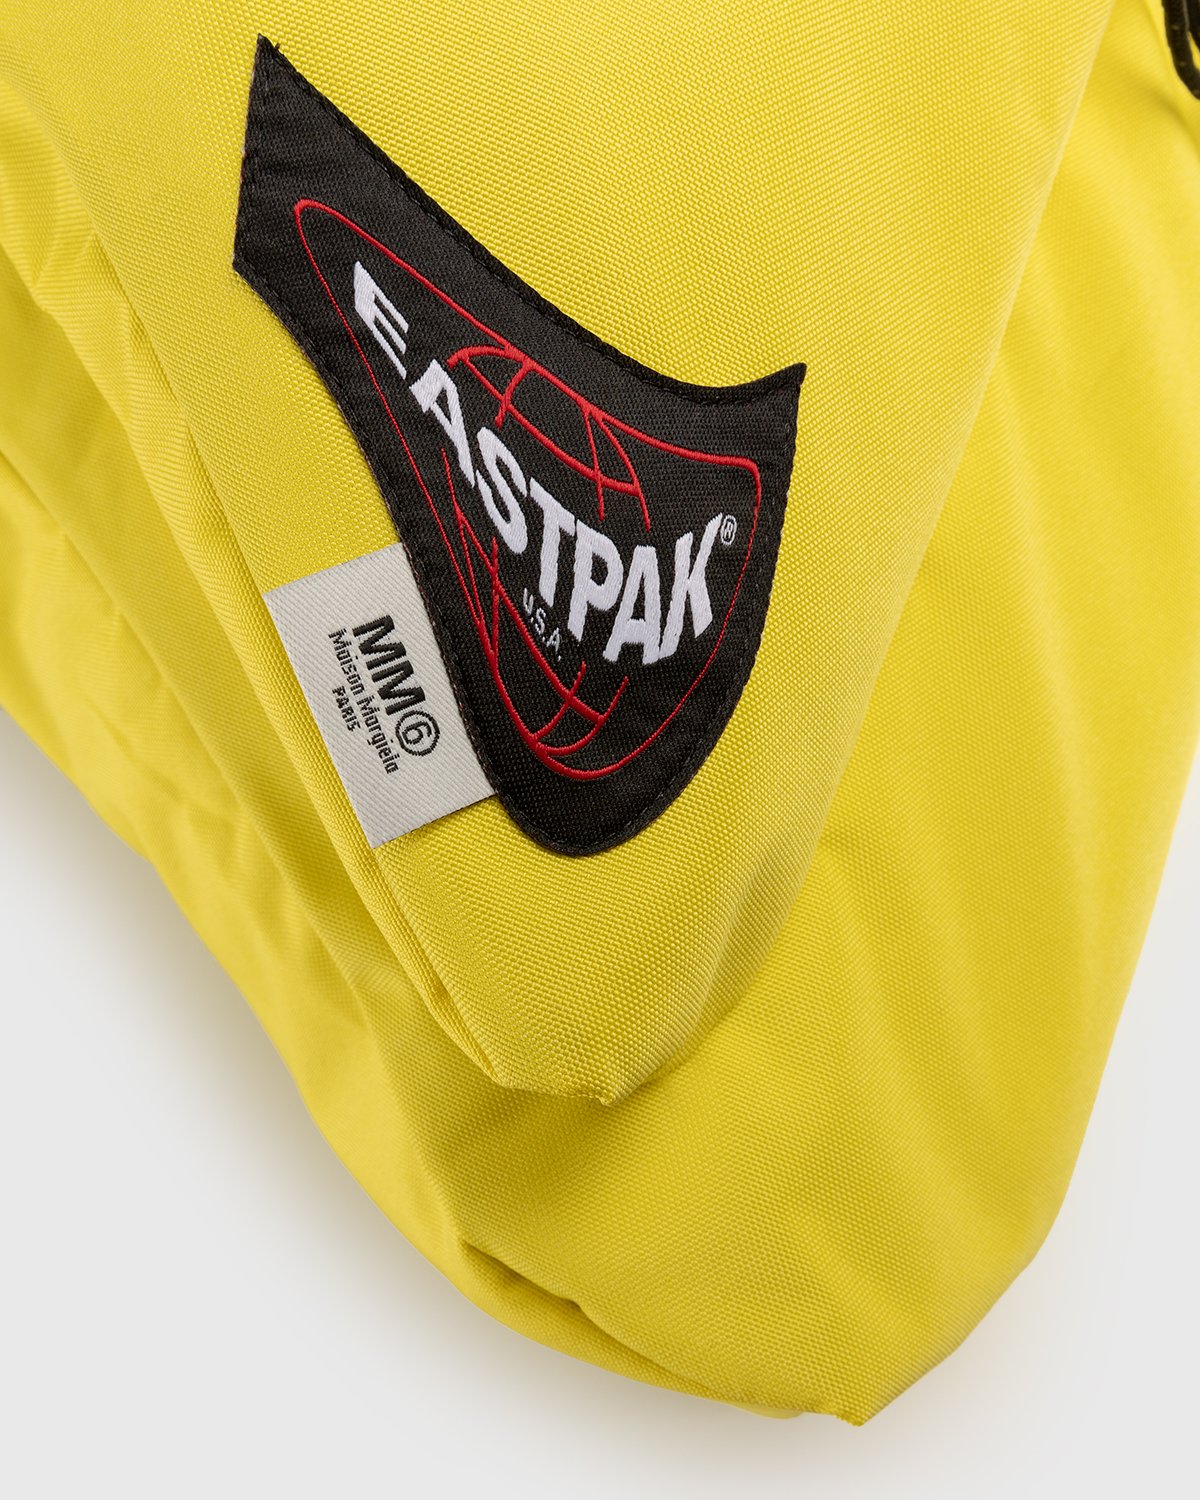 MM6 Maison Margiela x Eastpak - Zaino Backpack Yellow - Accessories - Yellow - Image 3